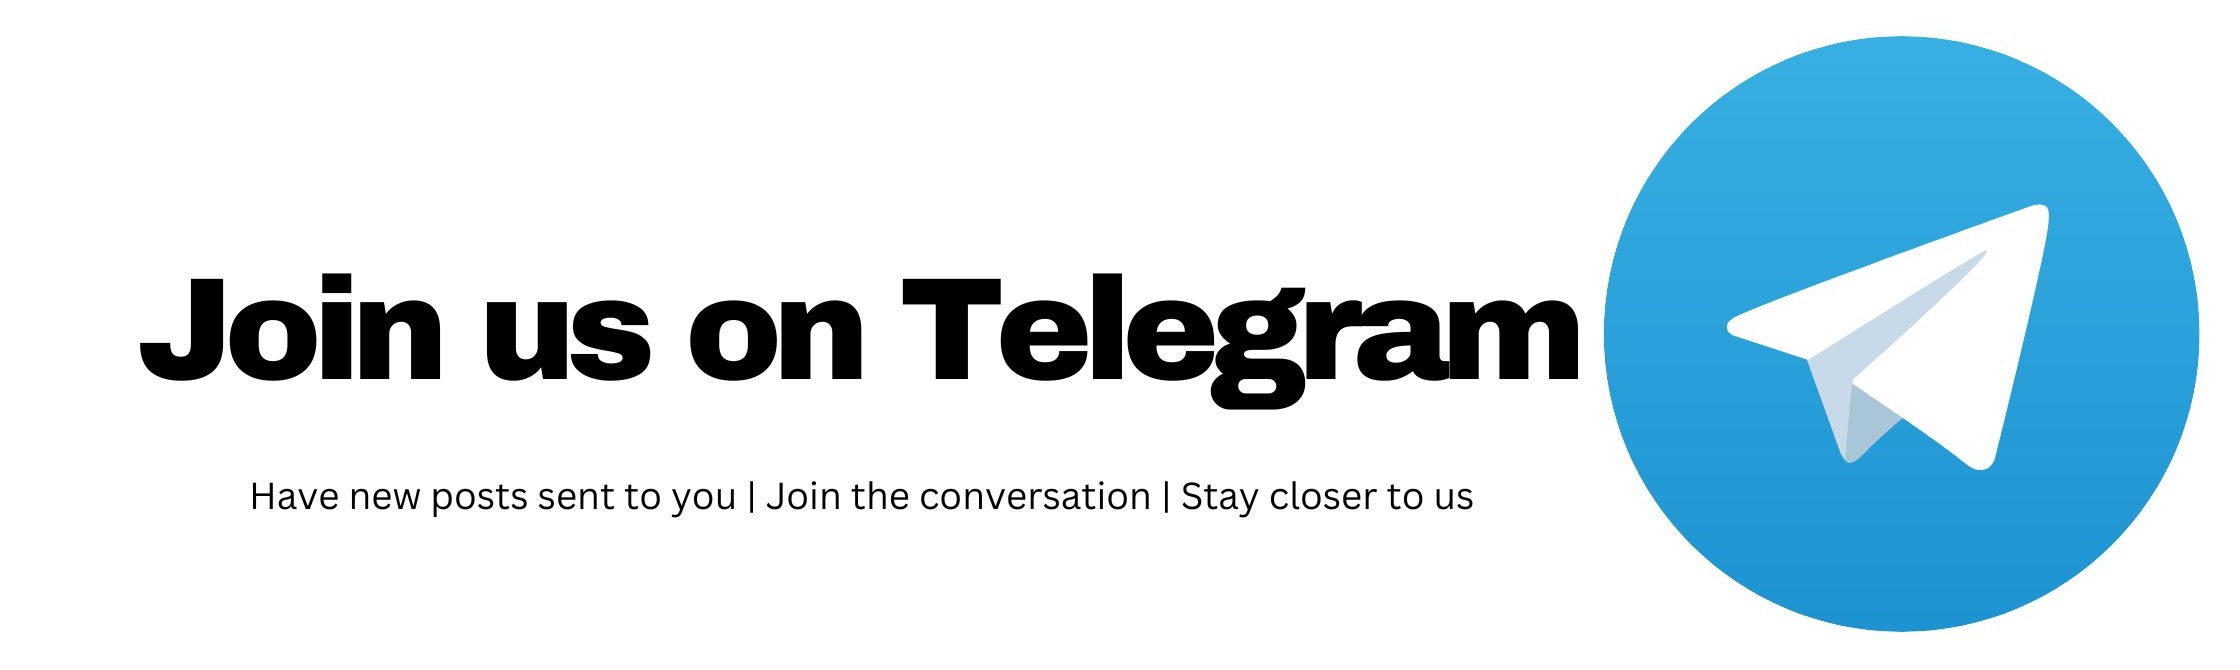 Join us on Telegram Pawns for more